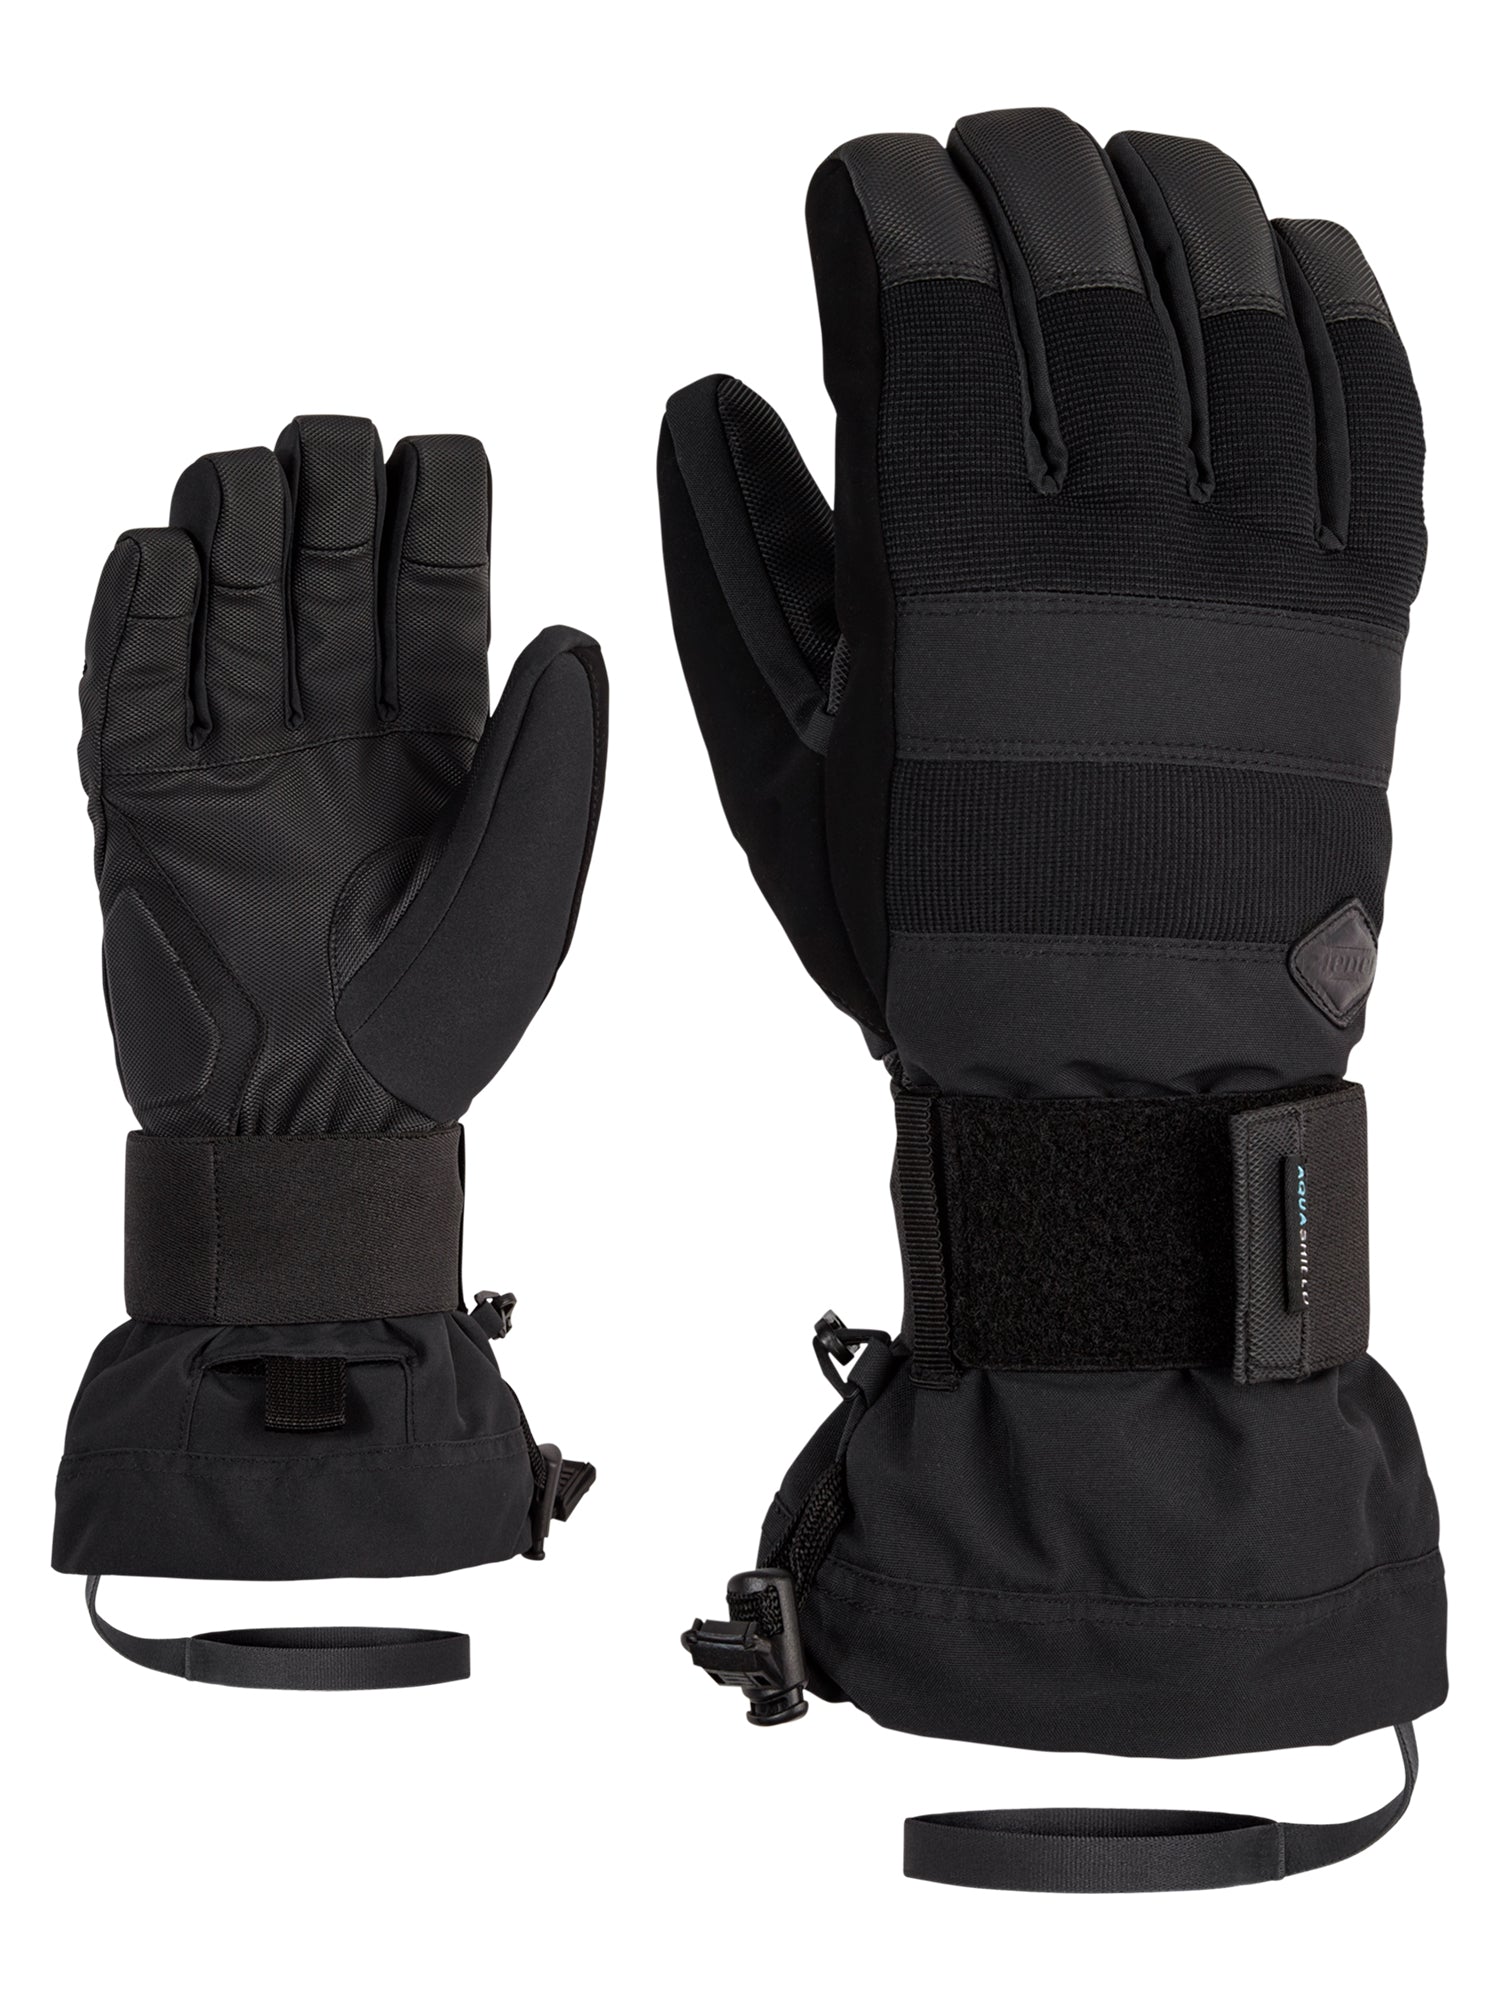 MILO AS(R) glove SB